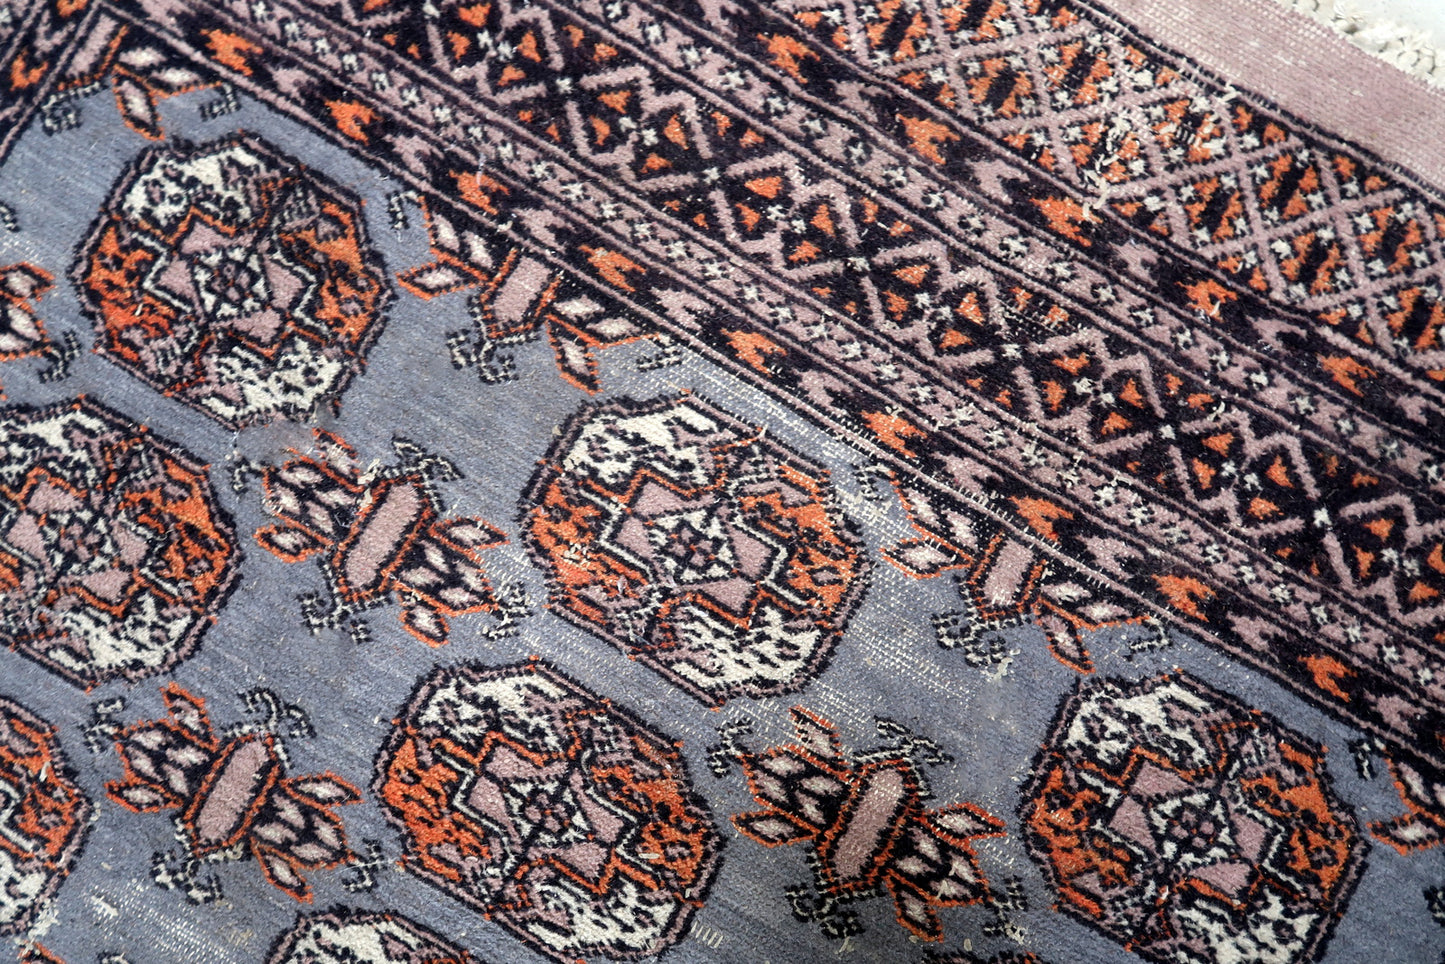 Handmade vintage Uzbek Bukhara rug 1960s